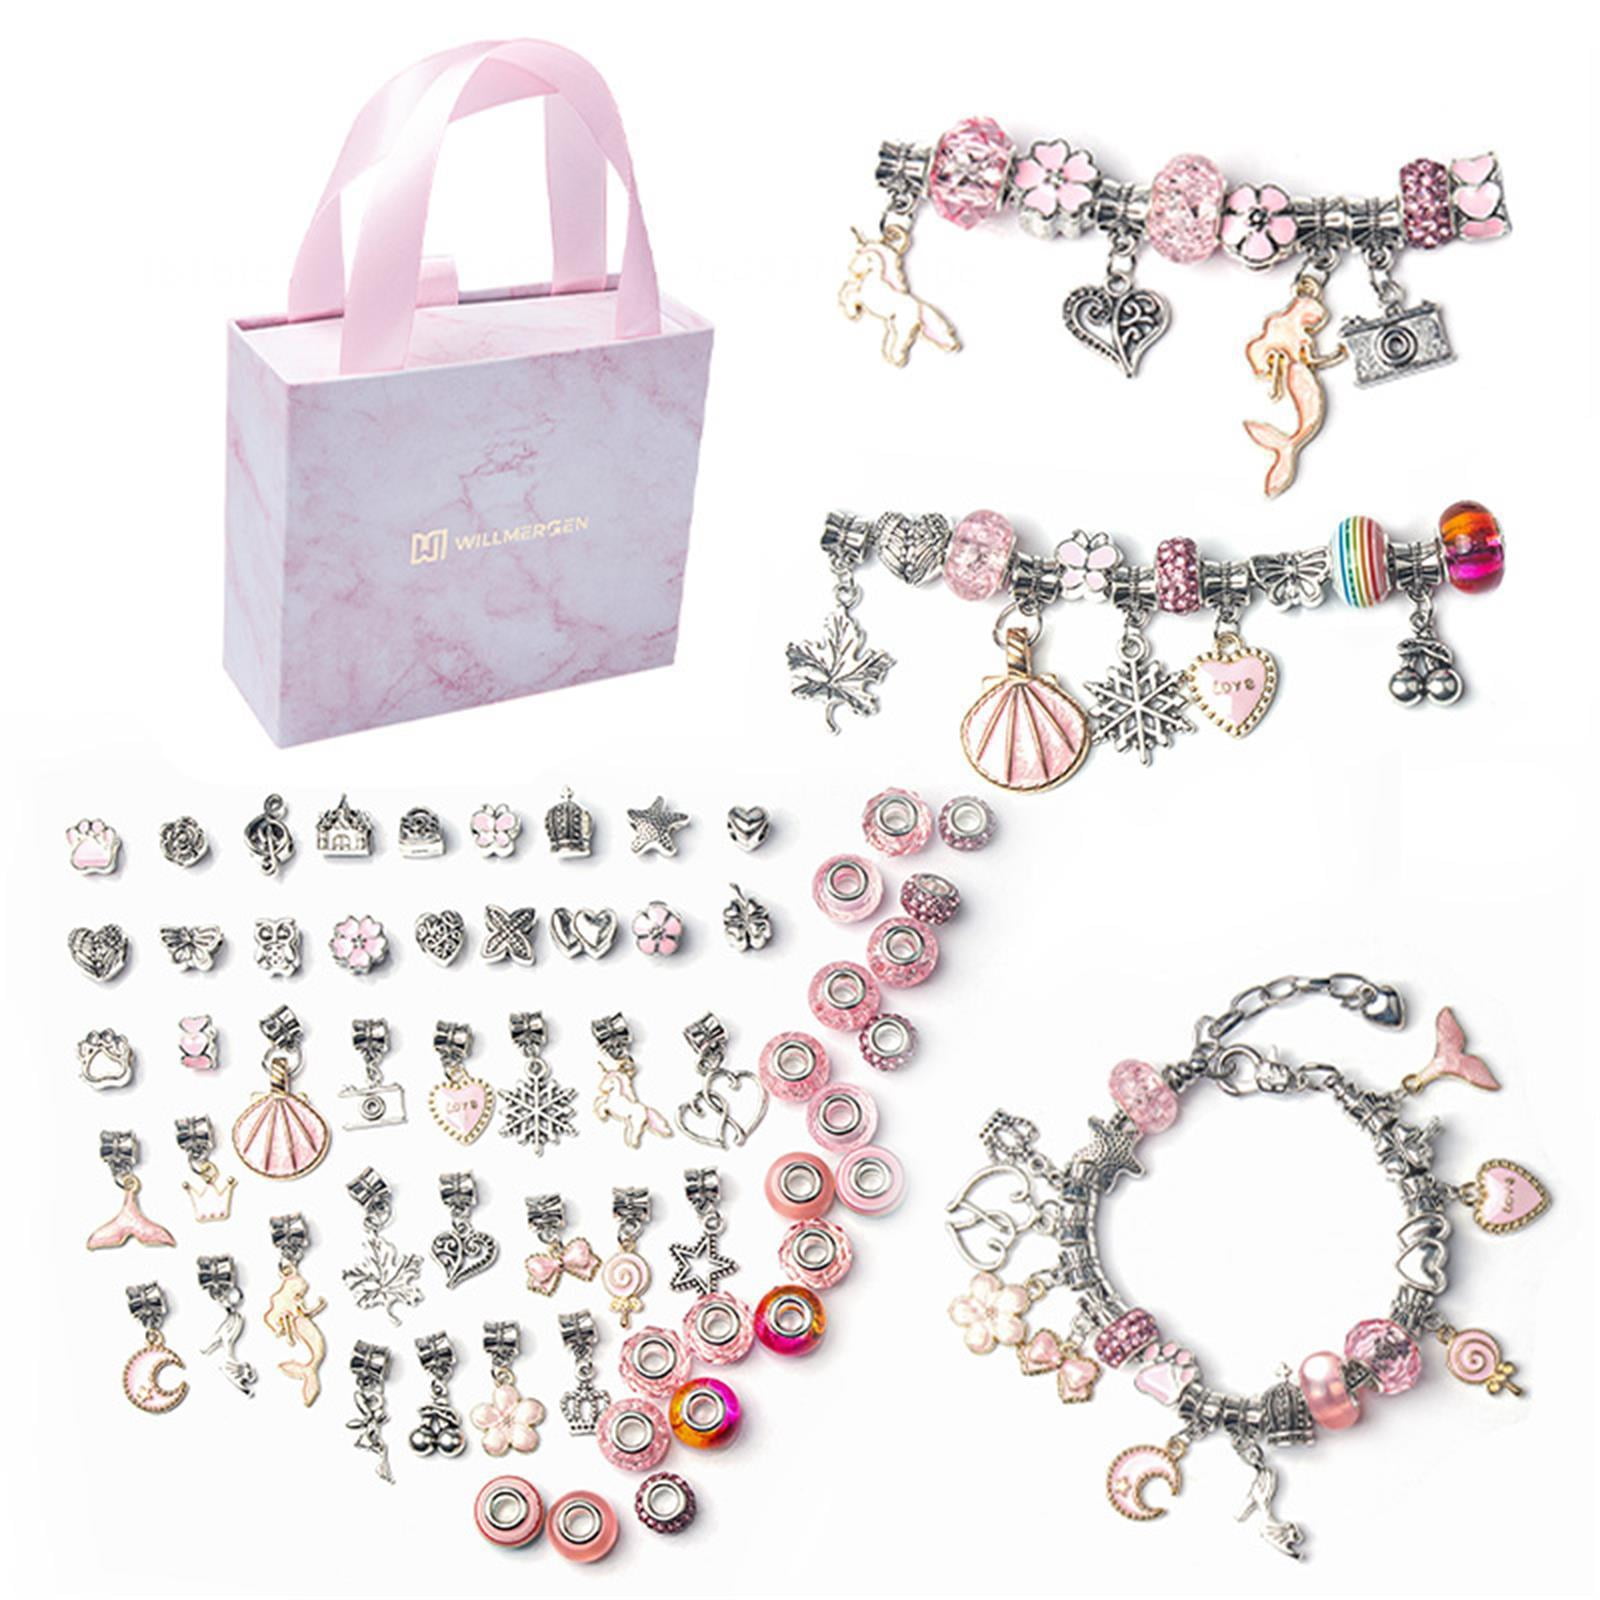 DIY Craft Kit Bracelet Making Kit Beads Pretty Birthday Gift Art Craft  Jewelry Making Kit for Girls Students Purple 